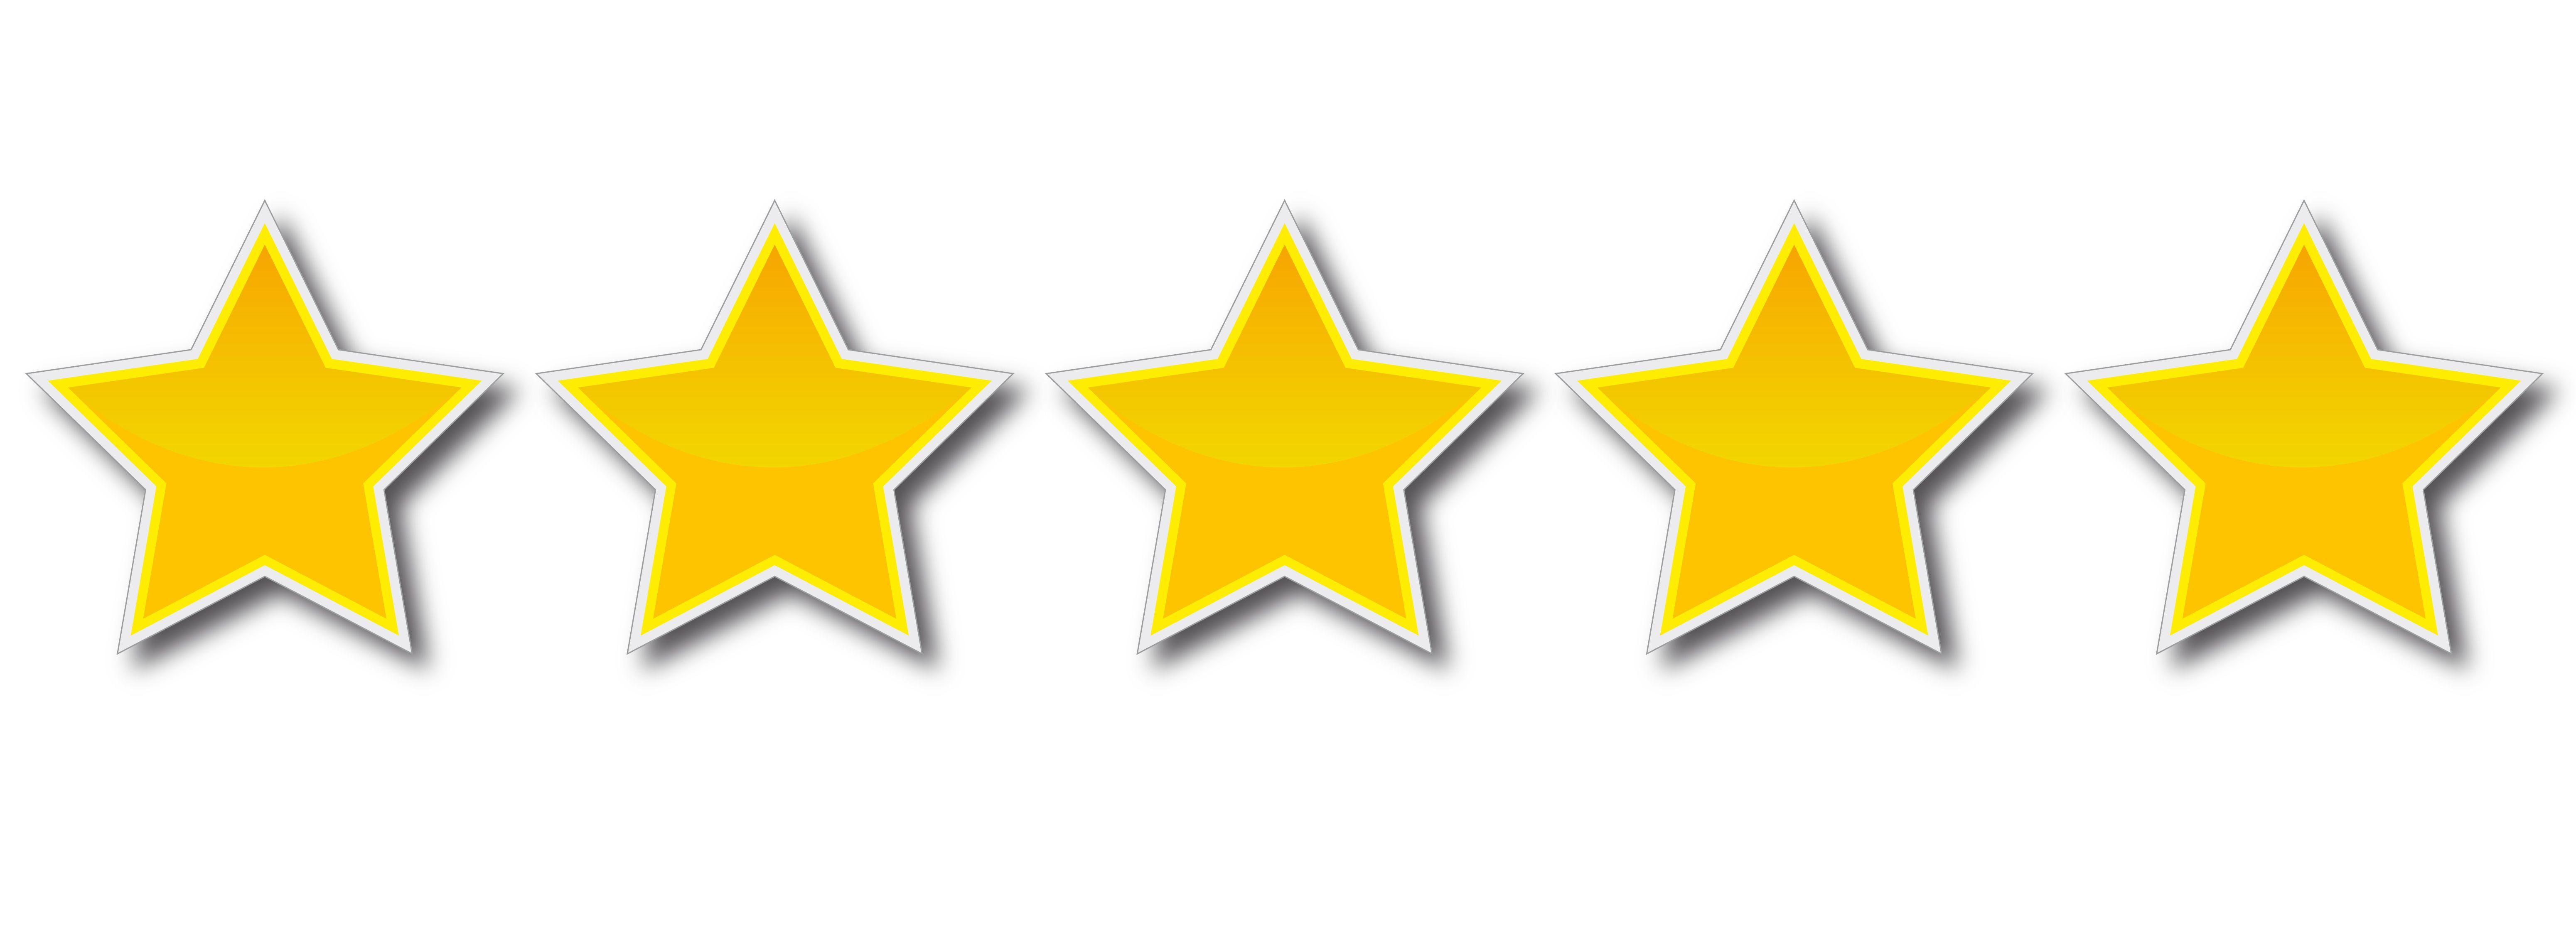 Review Stars Logo - Hospital Star Ratings Game Changer? Nurse Leader